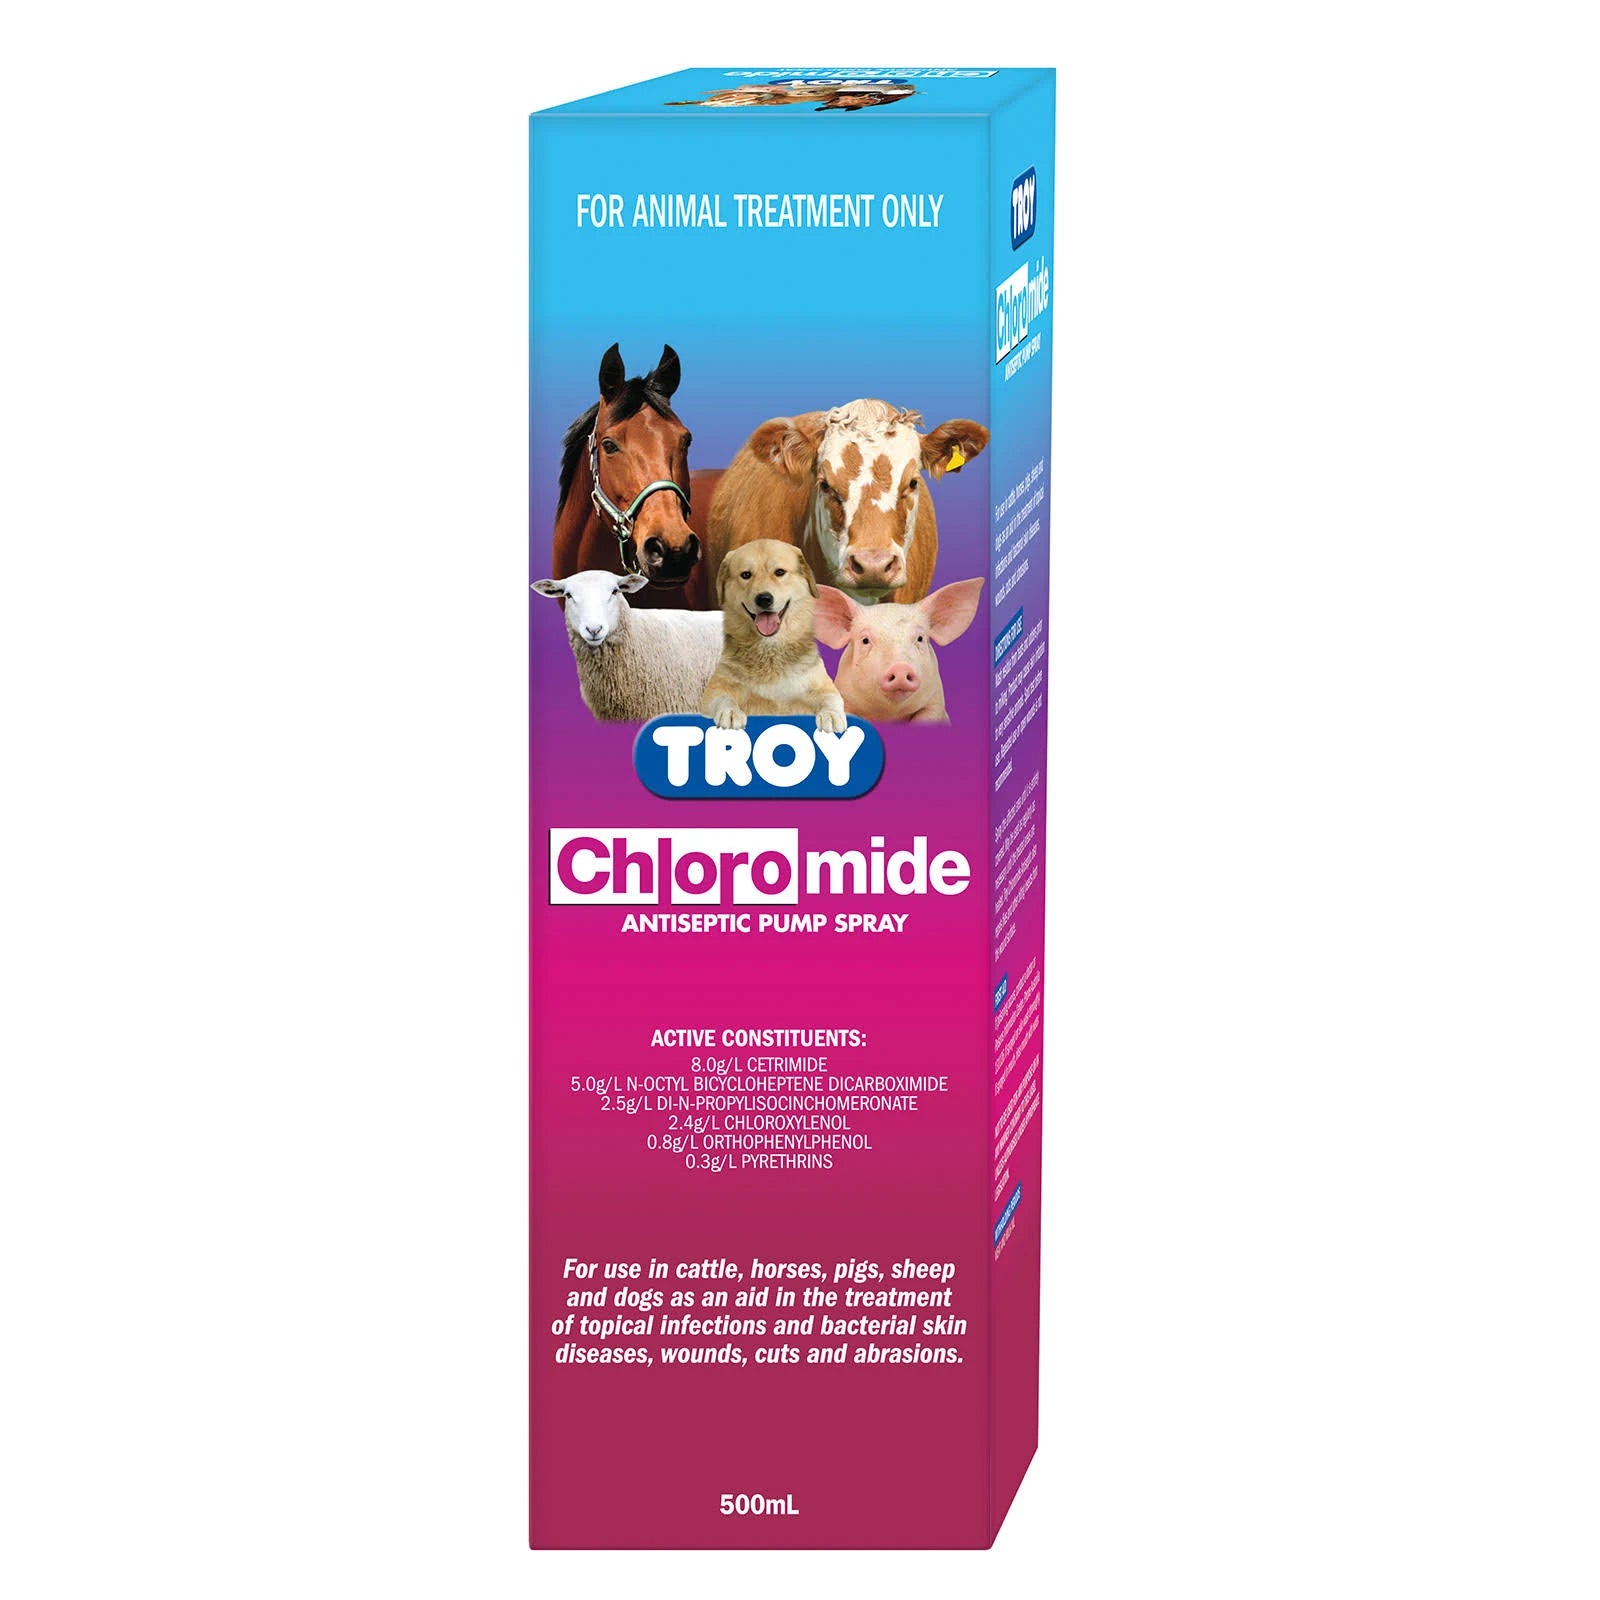 Troy Chloromide Antiseptic Spray